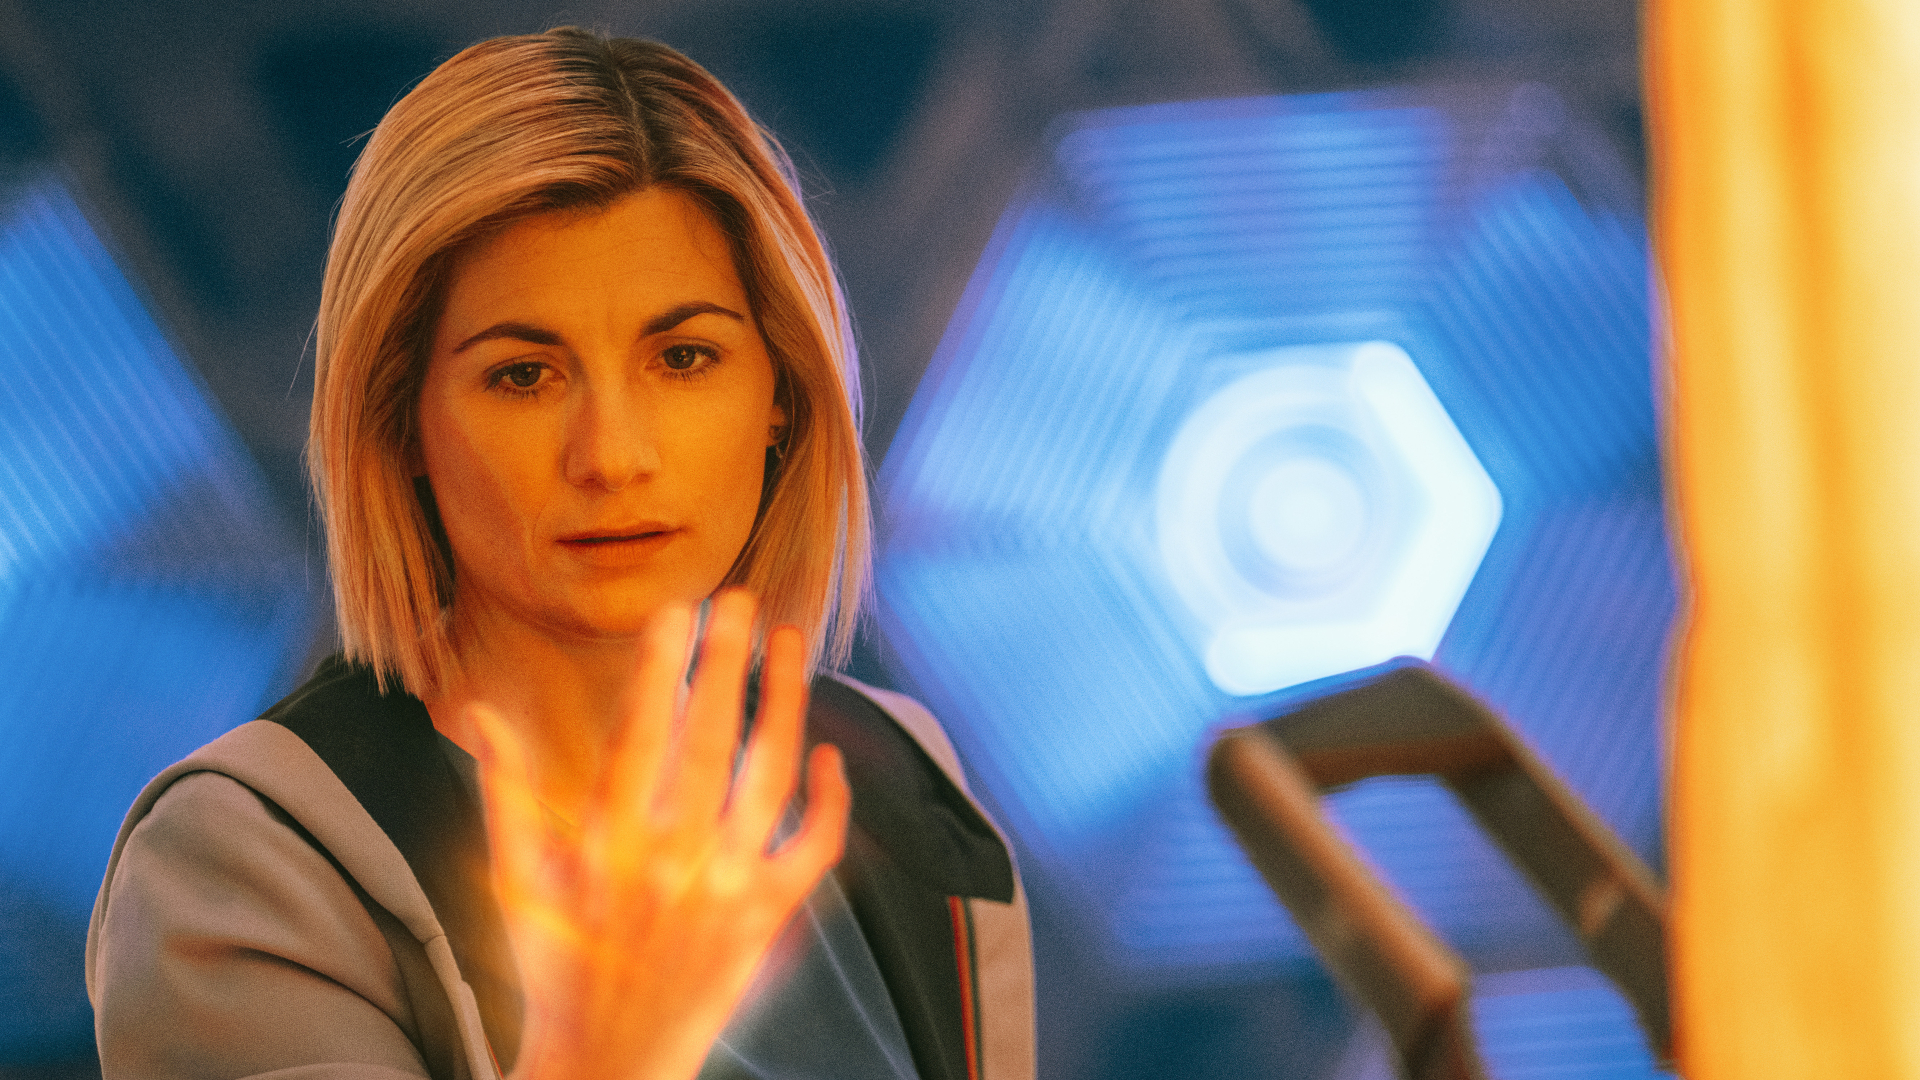 Jodie Whittaker begins regenerating in Doctor Who.